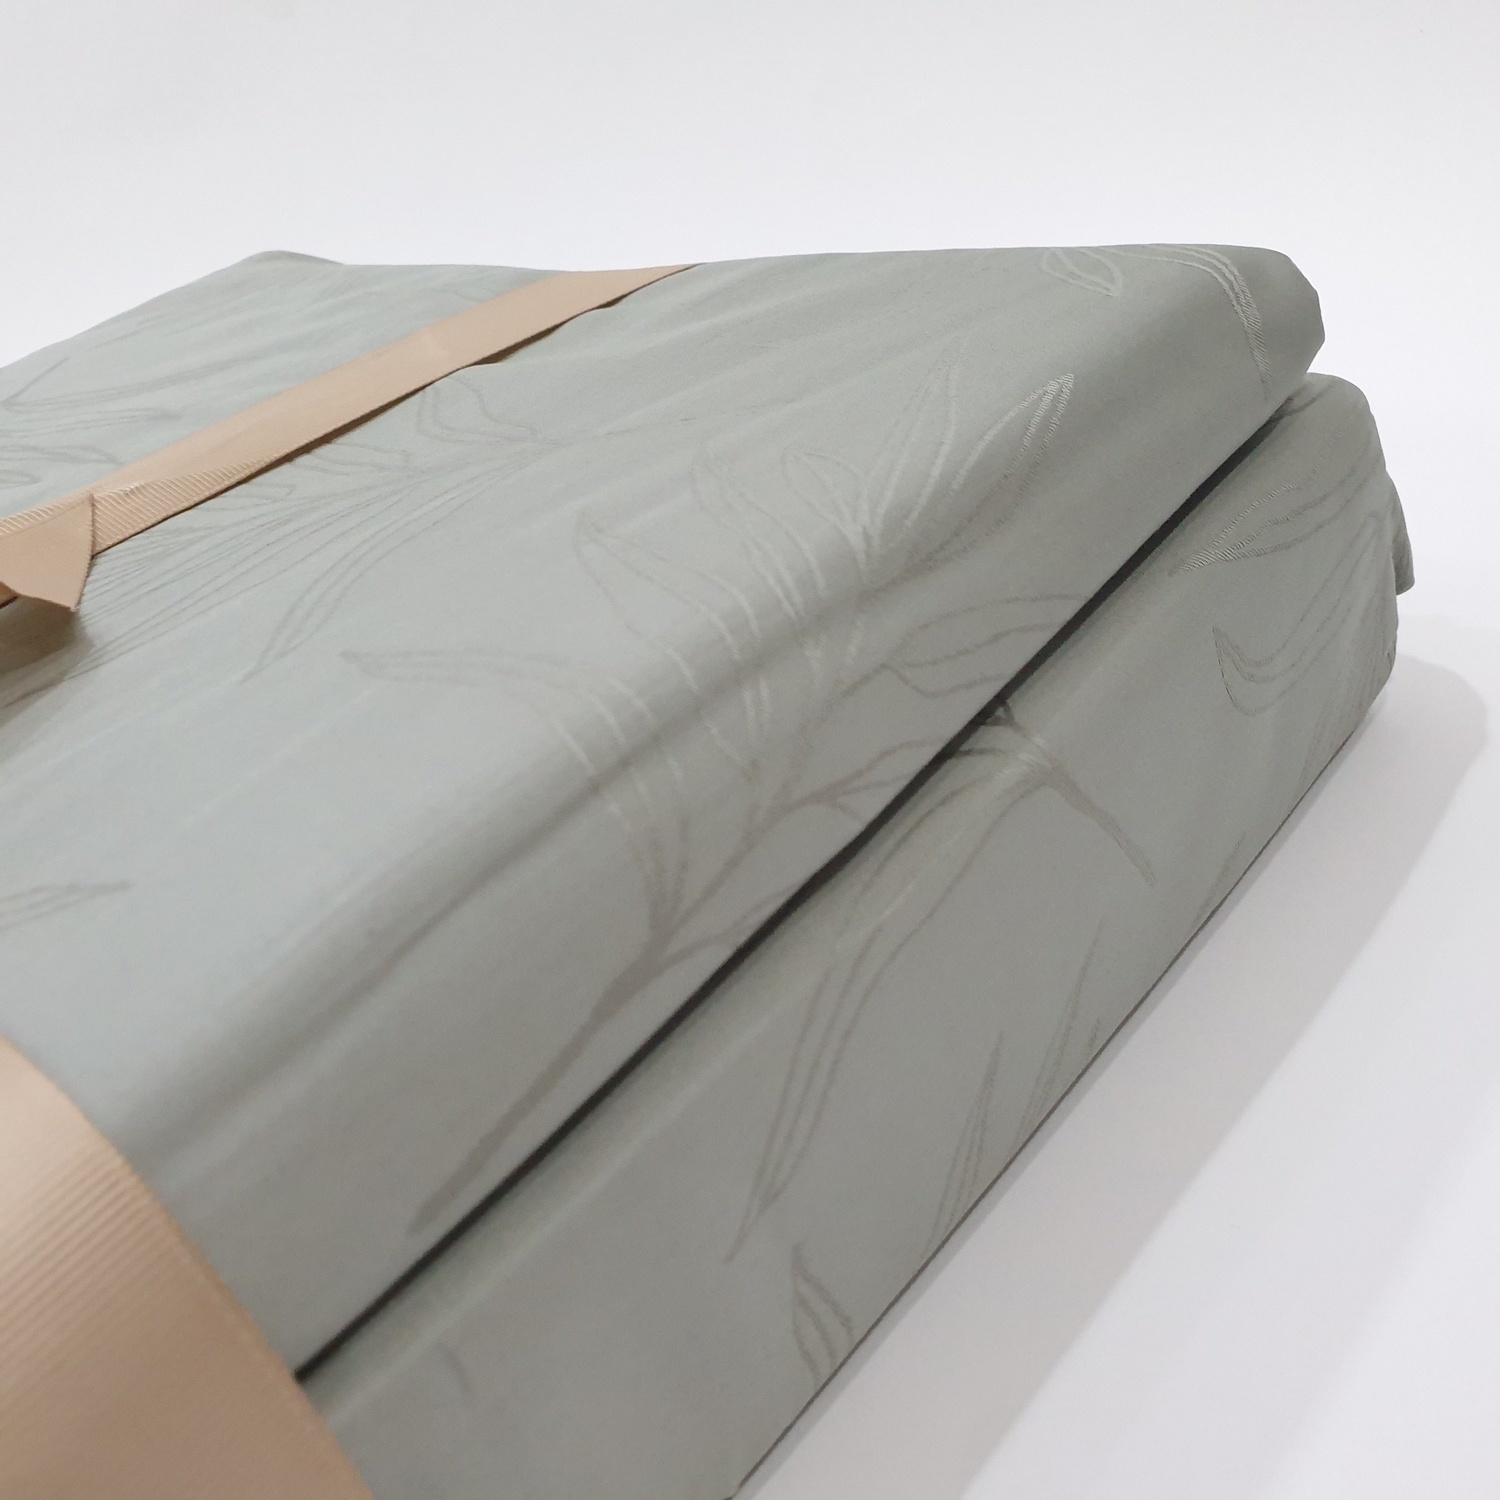 TRUFFLE ชุดผ้าปูที่นอนCOTTON 100% 4 ชิ้น ขนาด 6 ฟุต รุ่น 106-1-3 สีเขียวอ่อน